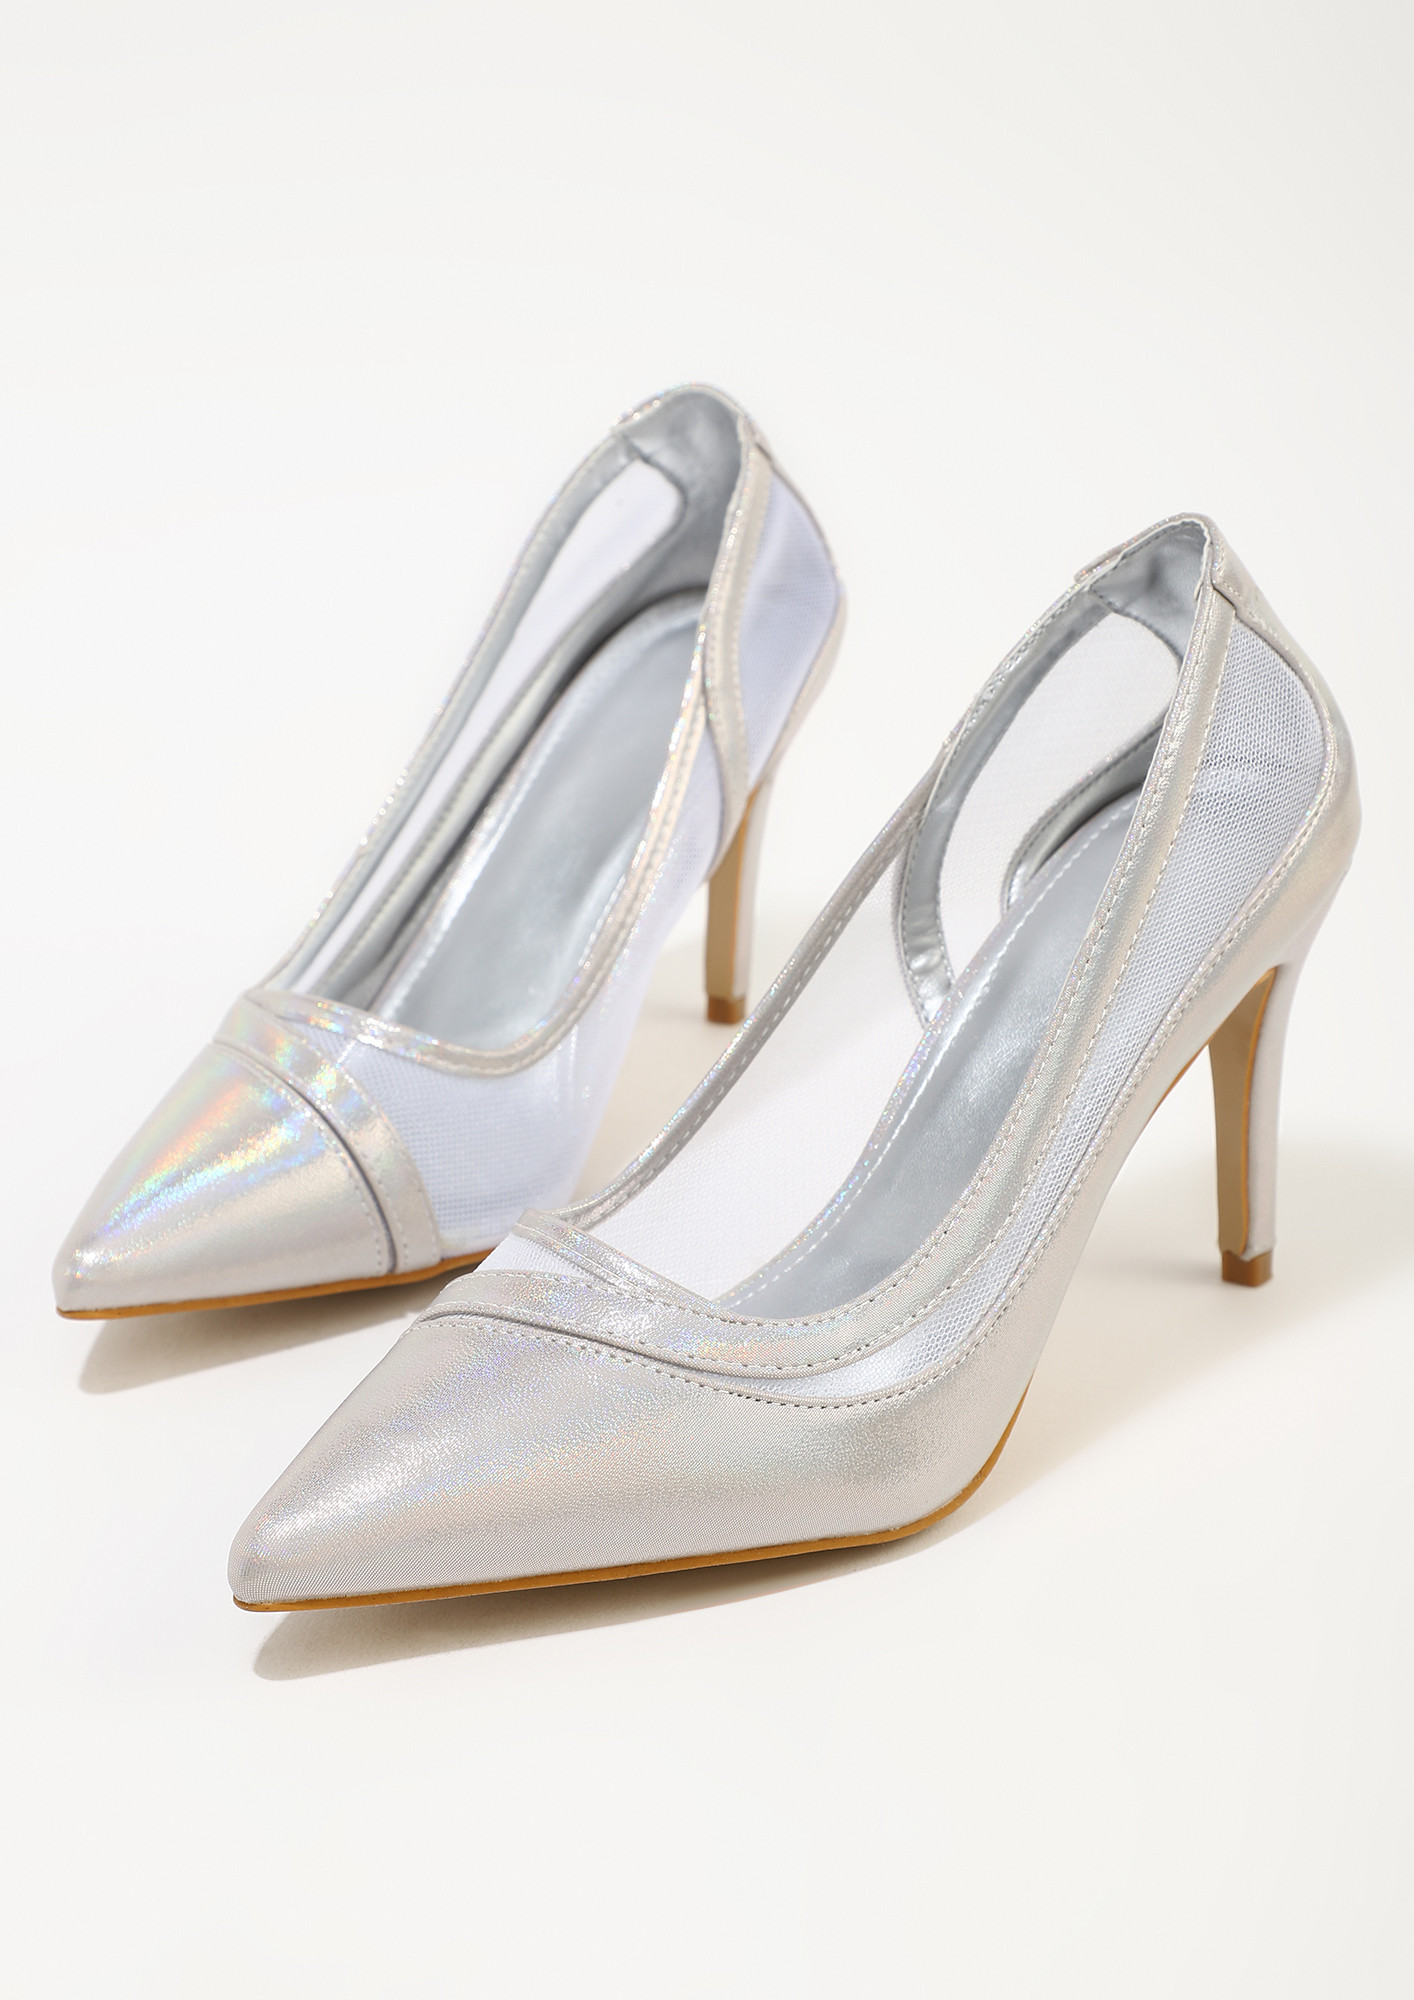 Top more than 145 silver pumps heels